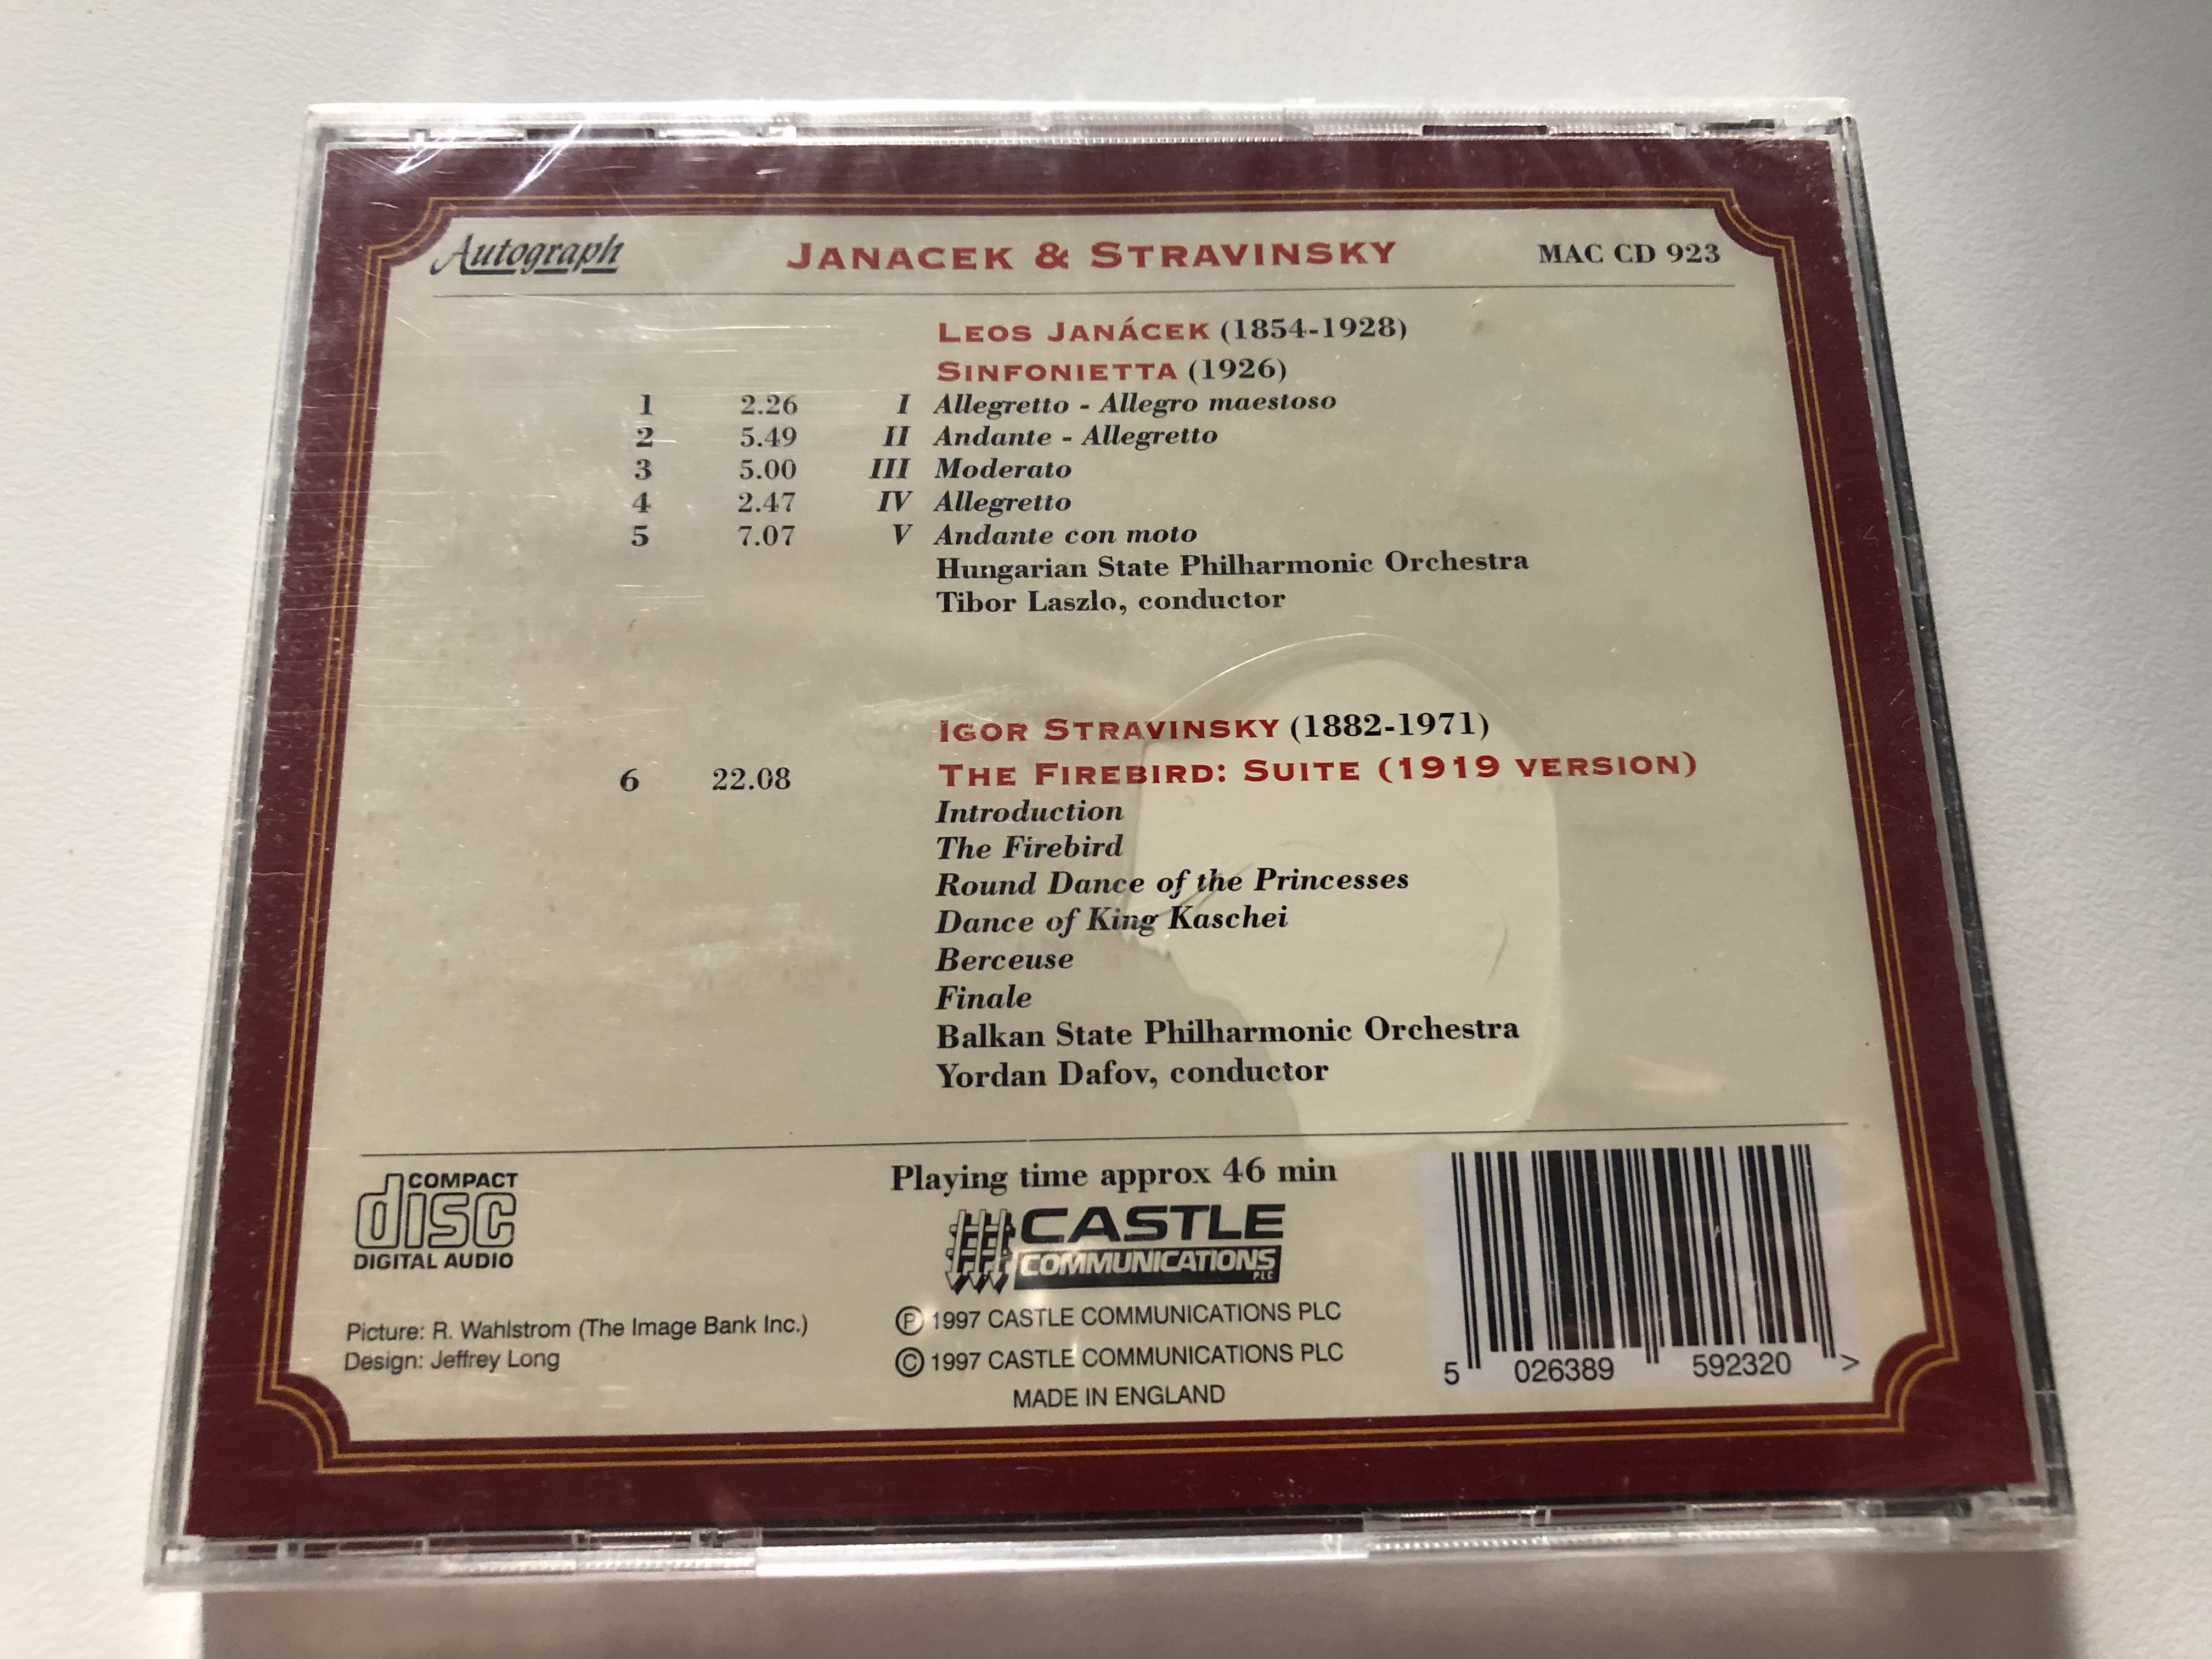 leos-janacek-sinfonietta-igor-stravinsky-the-firebird-ballet-suite-autograph-audio-cd-1997-mac-cd-923-2-.jpg